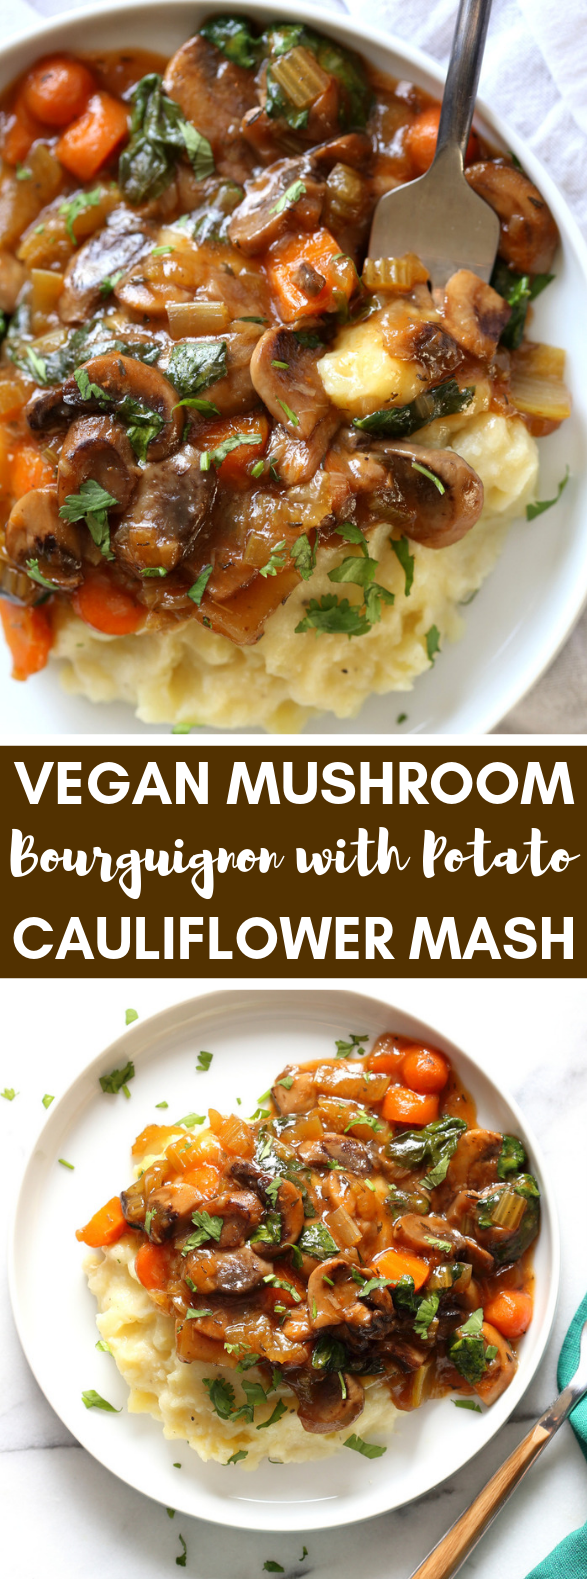 Vegan Mushroom Bourguignon with Potato Cauliflower Mash